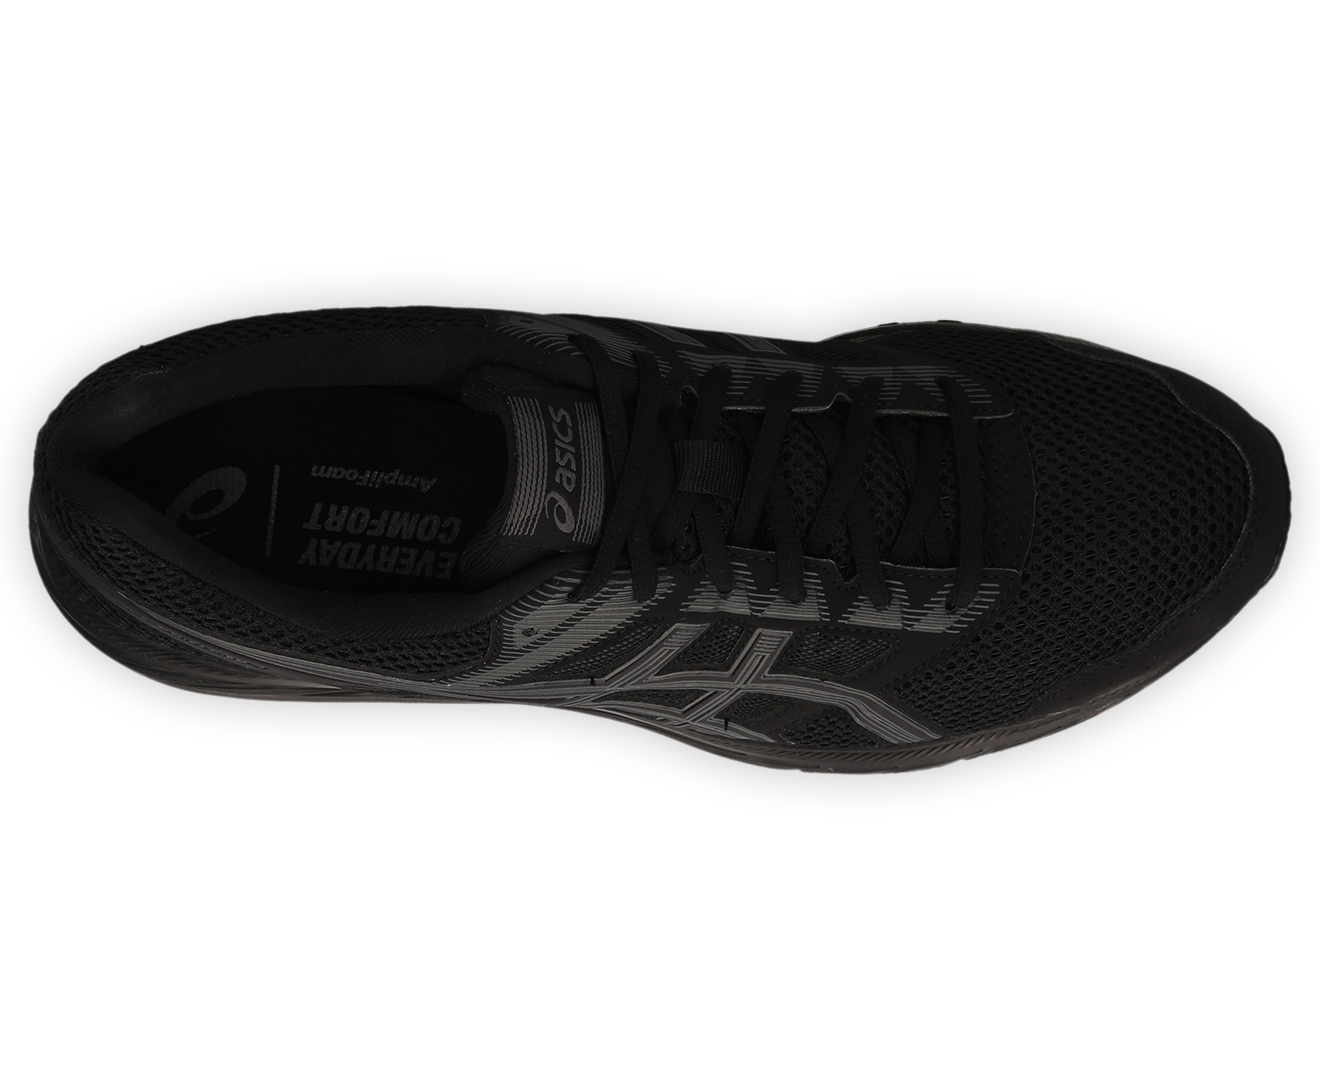 ASICS Men's GEL-Contend 5 Running Sports Shoes - Black/Dark Grey ...